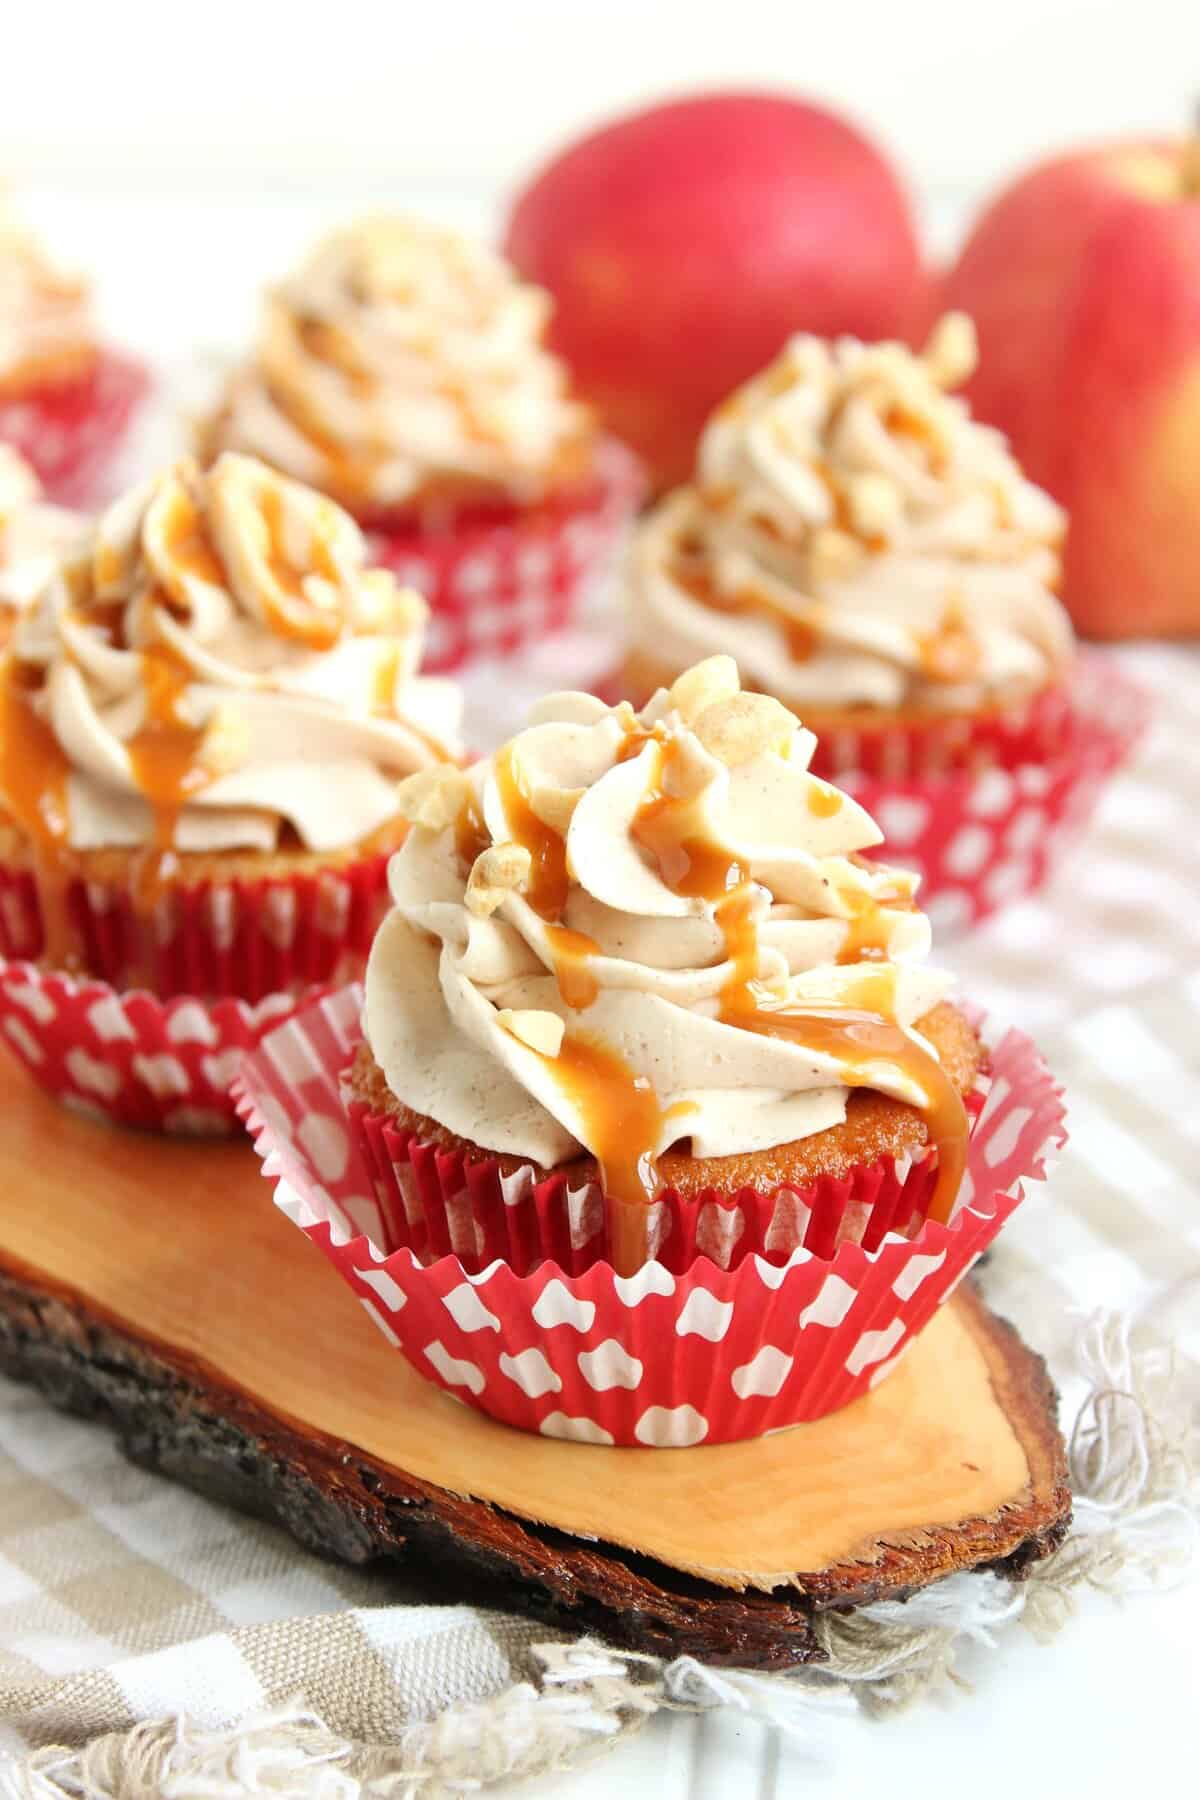 Caramel Apple Cupcakes with Cinnamon Buttercream - The Suburban Soapbox